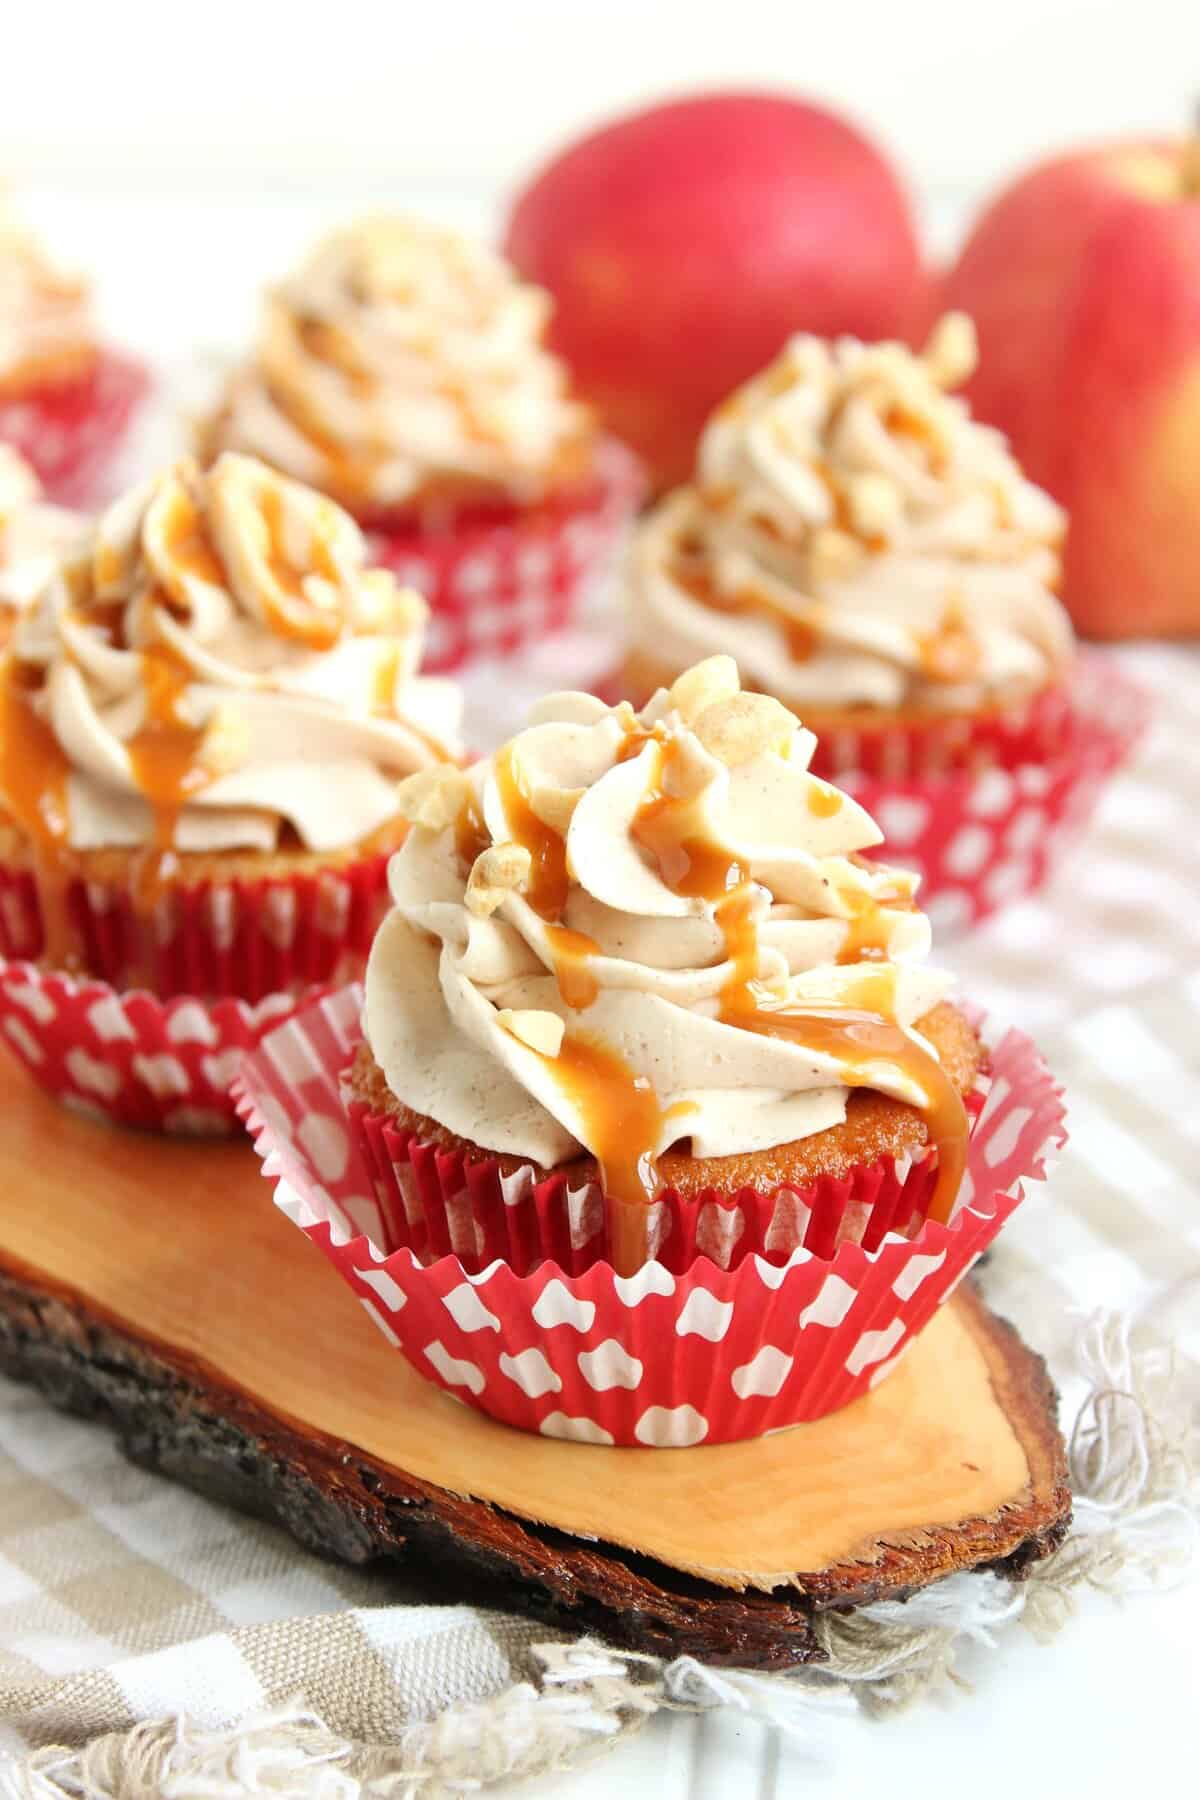 Caramel Apple Cupcakes with Cinnamon Buttercream - The Suburban Soapbox